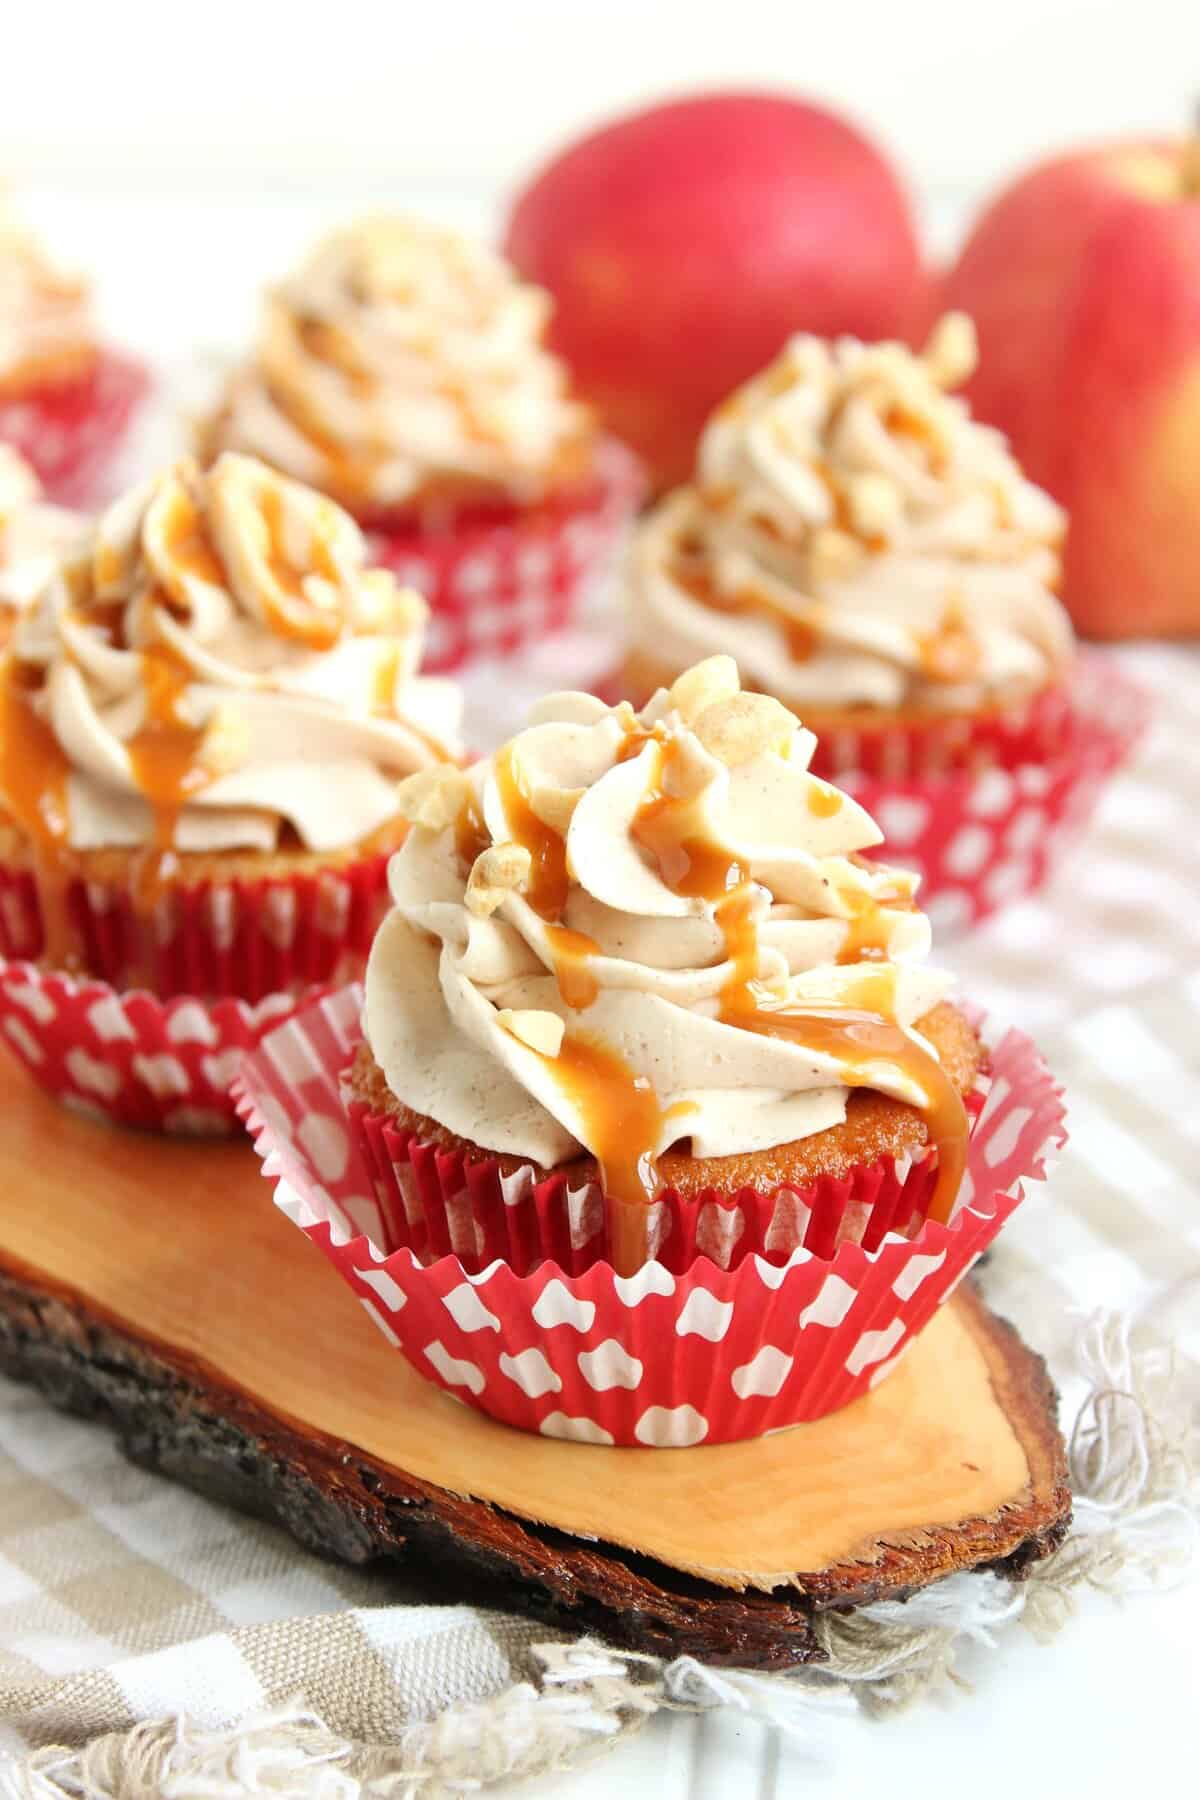 Caramel Apple Cupcakes with Cinnamon Buttercream - The Suburban Soapbox